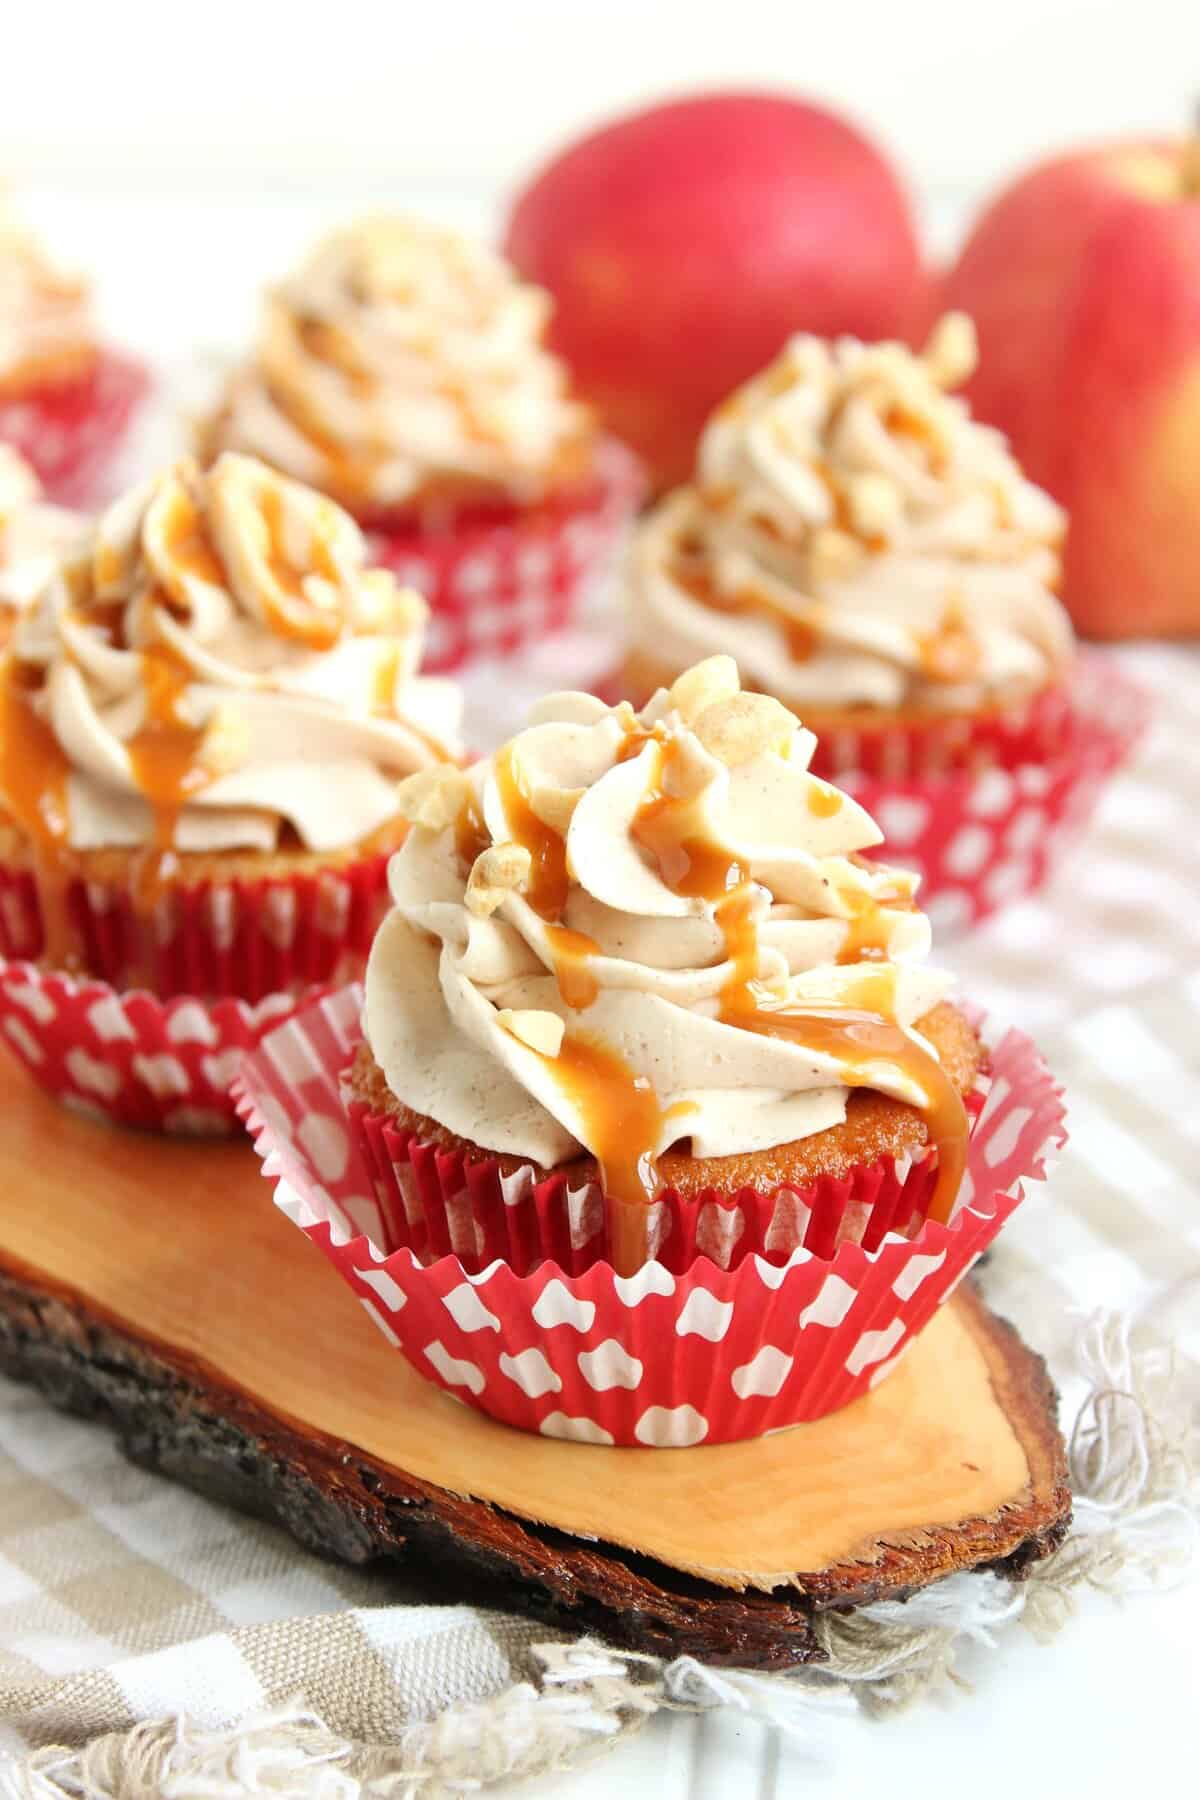 Caramel Apple Cupcakes with Cinnamon Buttercream - The Suburban Soapbox